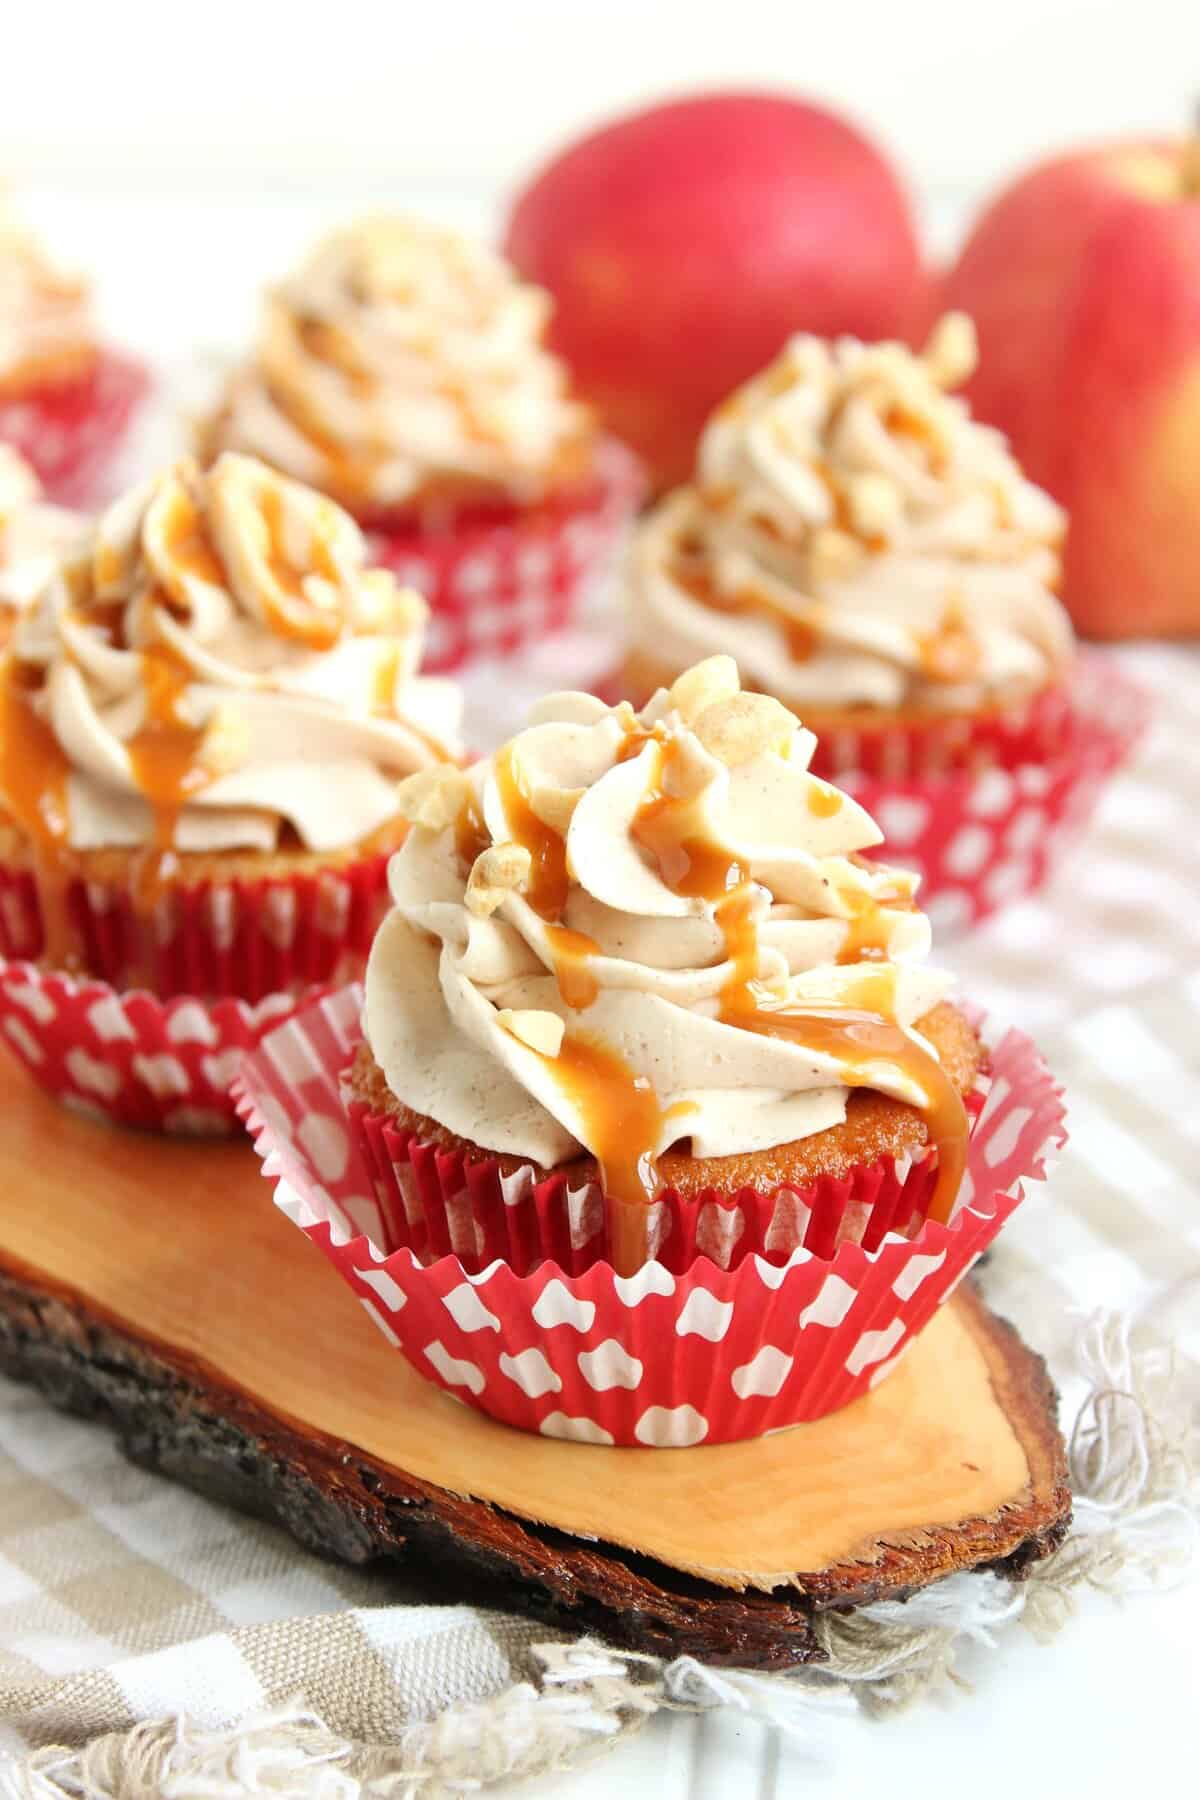 Caramel Apple Cupcakes with Cinnamon Buttercream - The Suburban Soapbox